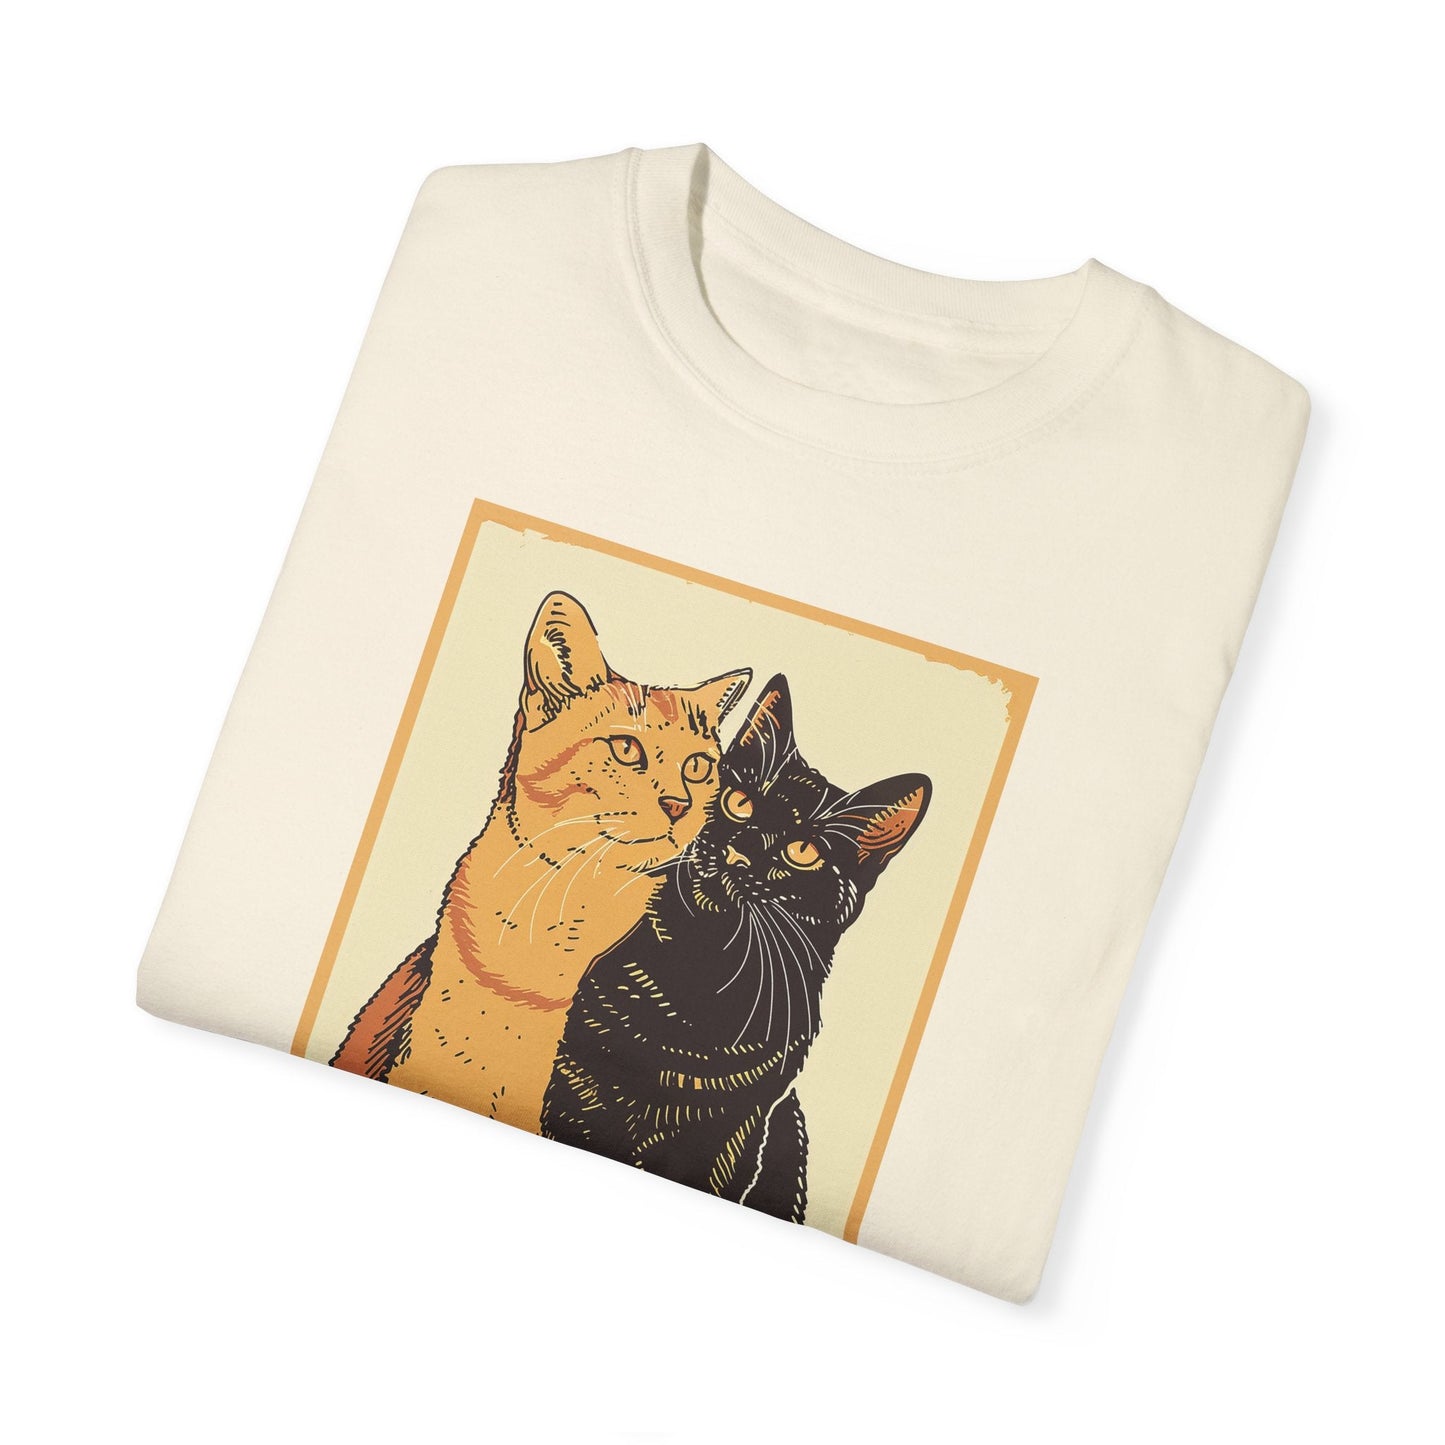 Vintage Style Pair of Cats T-shirt, Cute Black and Tabby Cat Shirt, Art Deco - FlooredByArt